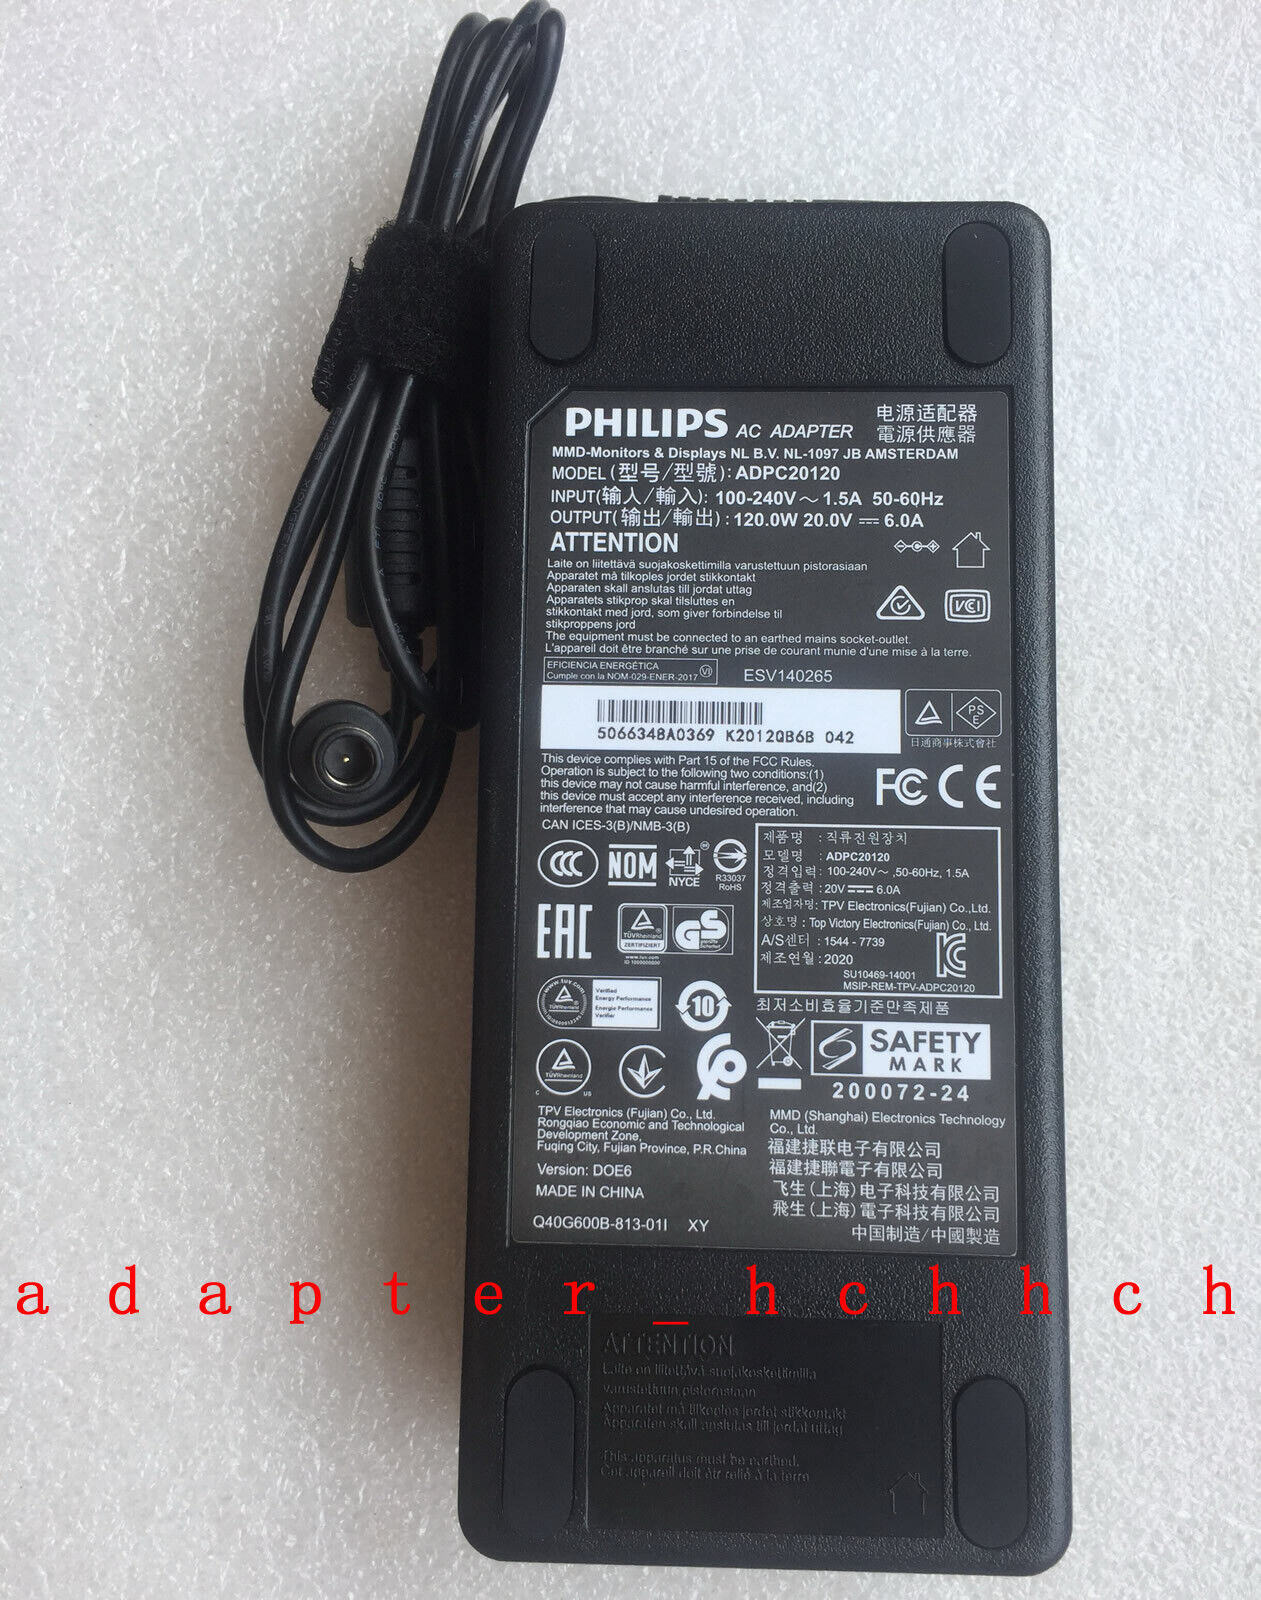 New Original Philips 343E2E UltraWide LCD monitor ADPC20120 20V 6A AC/DC Adapter